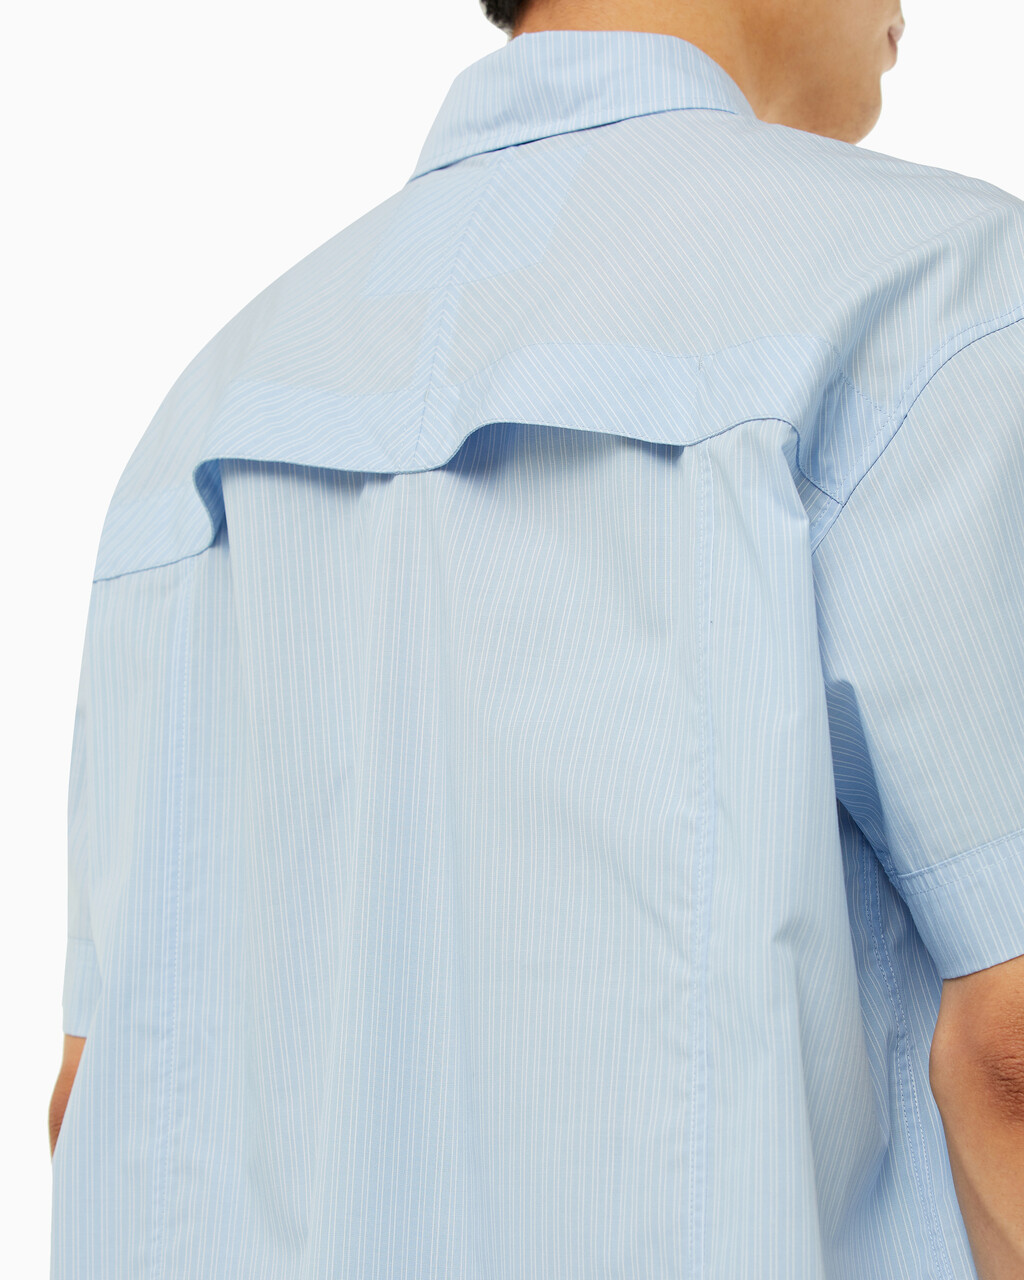 Buy 남성 릴렉스핏 패널 스트라이프 반팔 셔츠 in color SKY BLUE